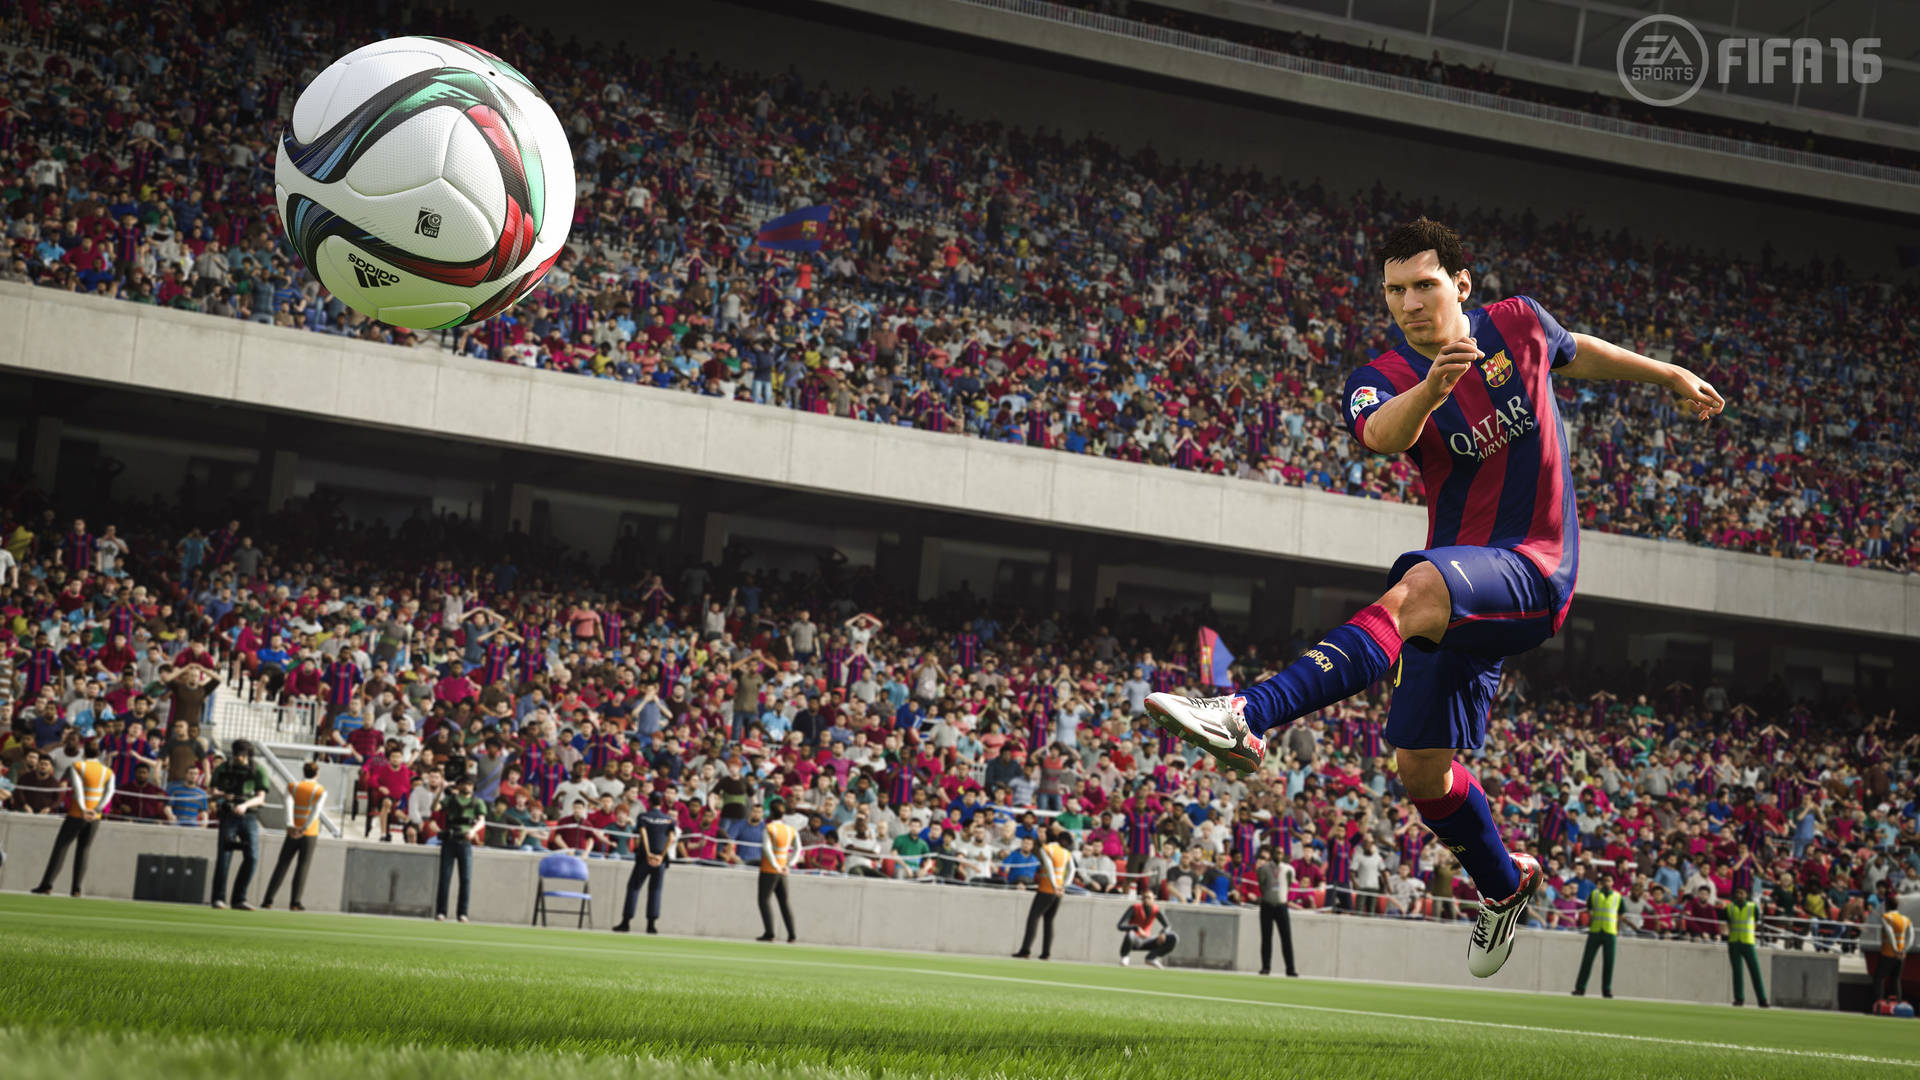 Fifa 16 Messi 4k Ultra Hd Background